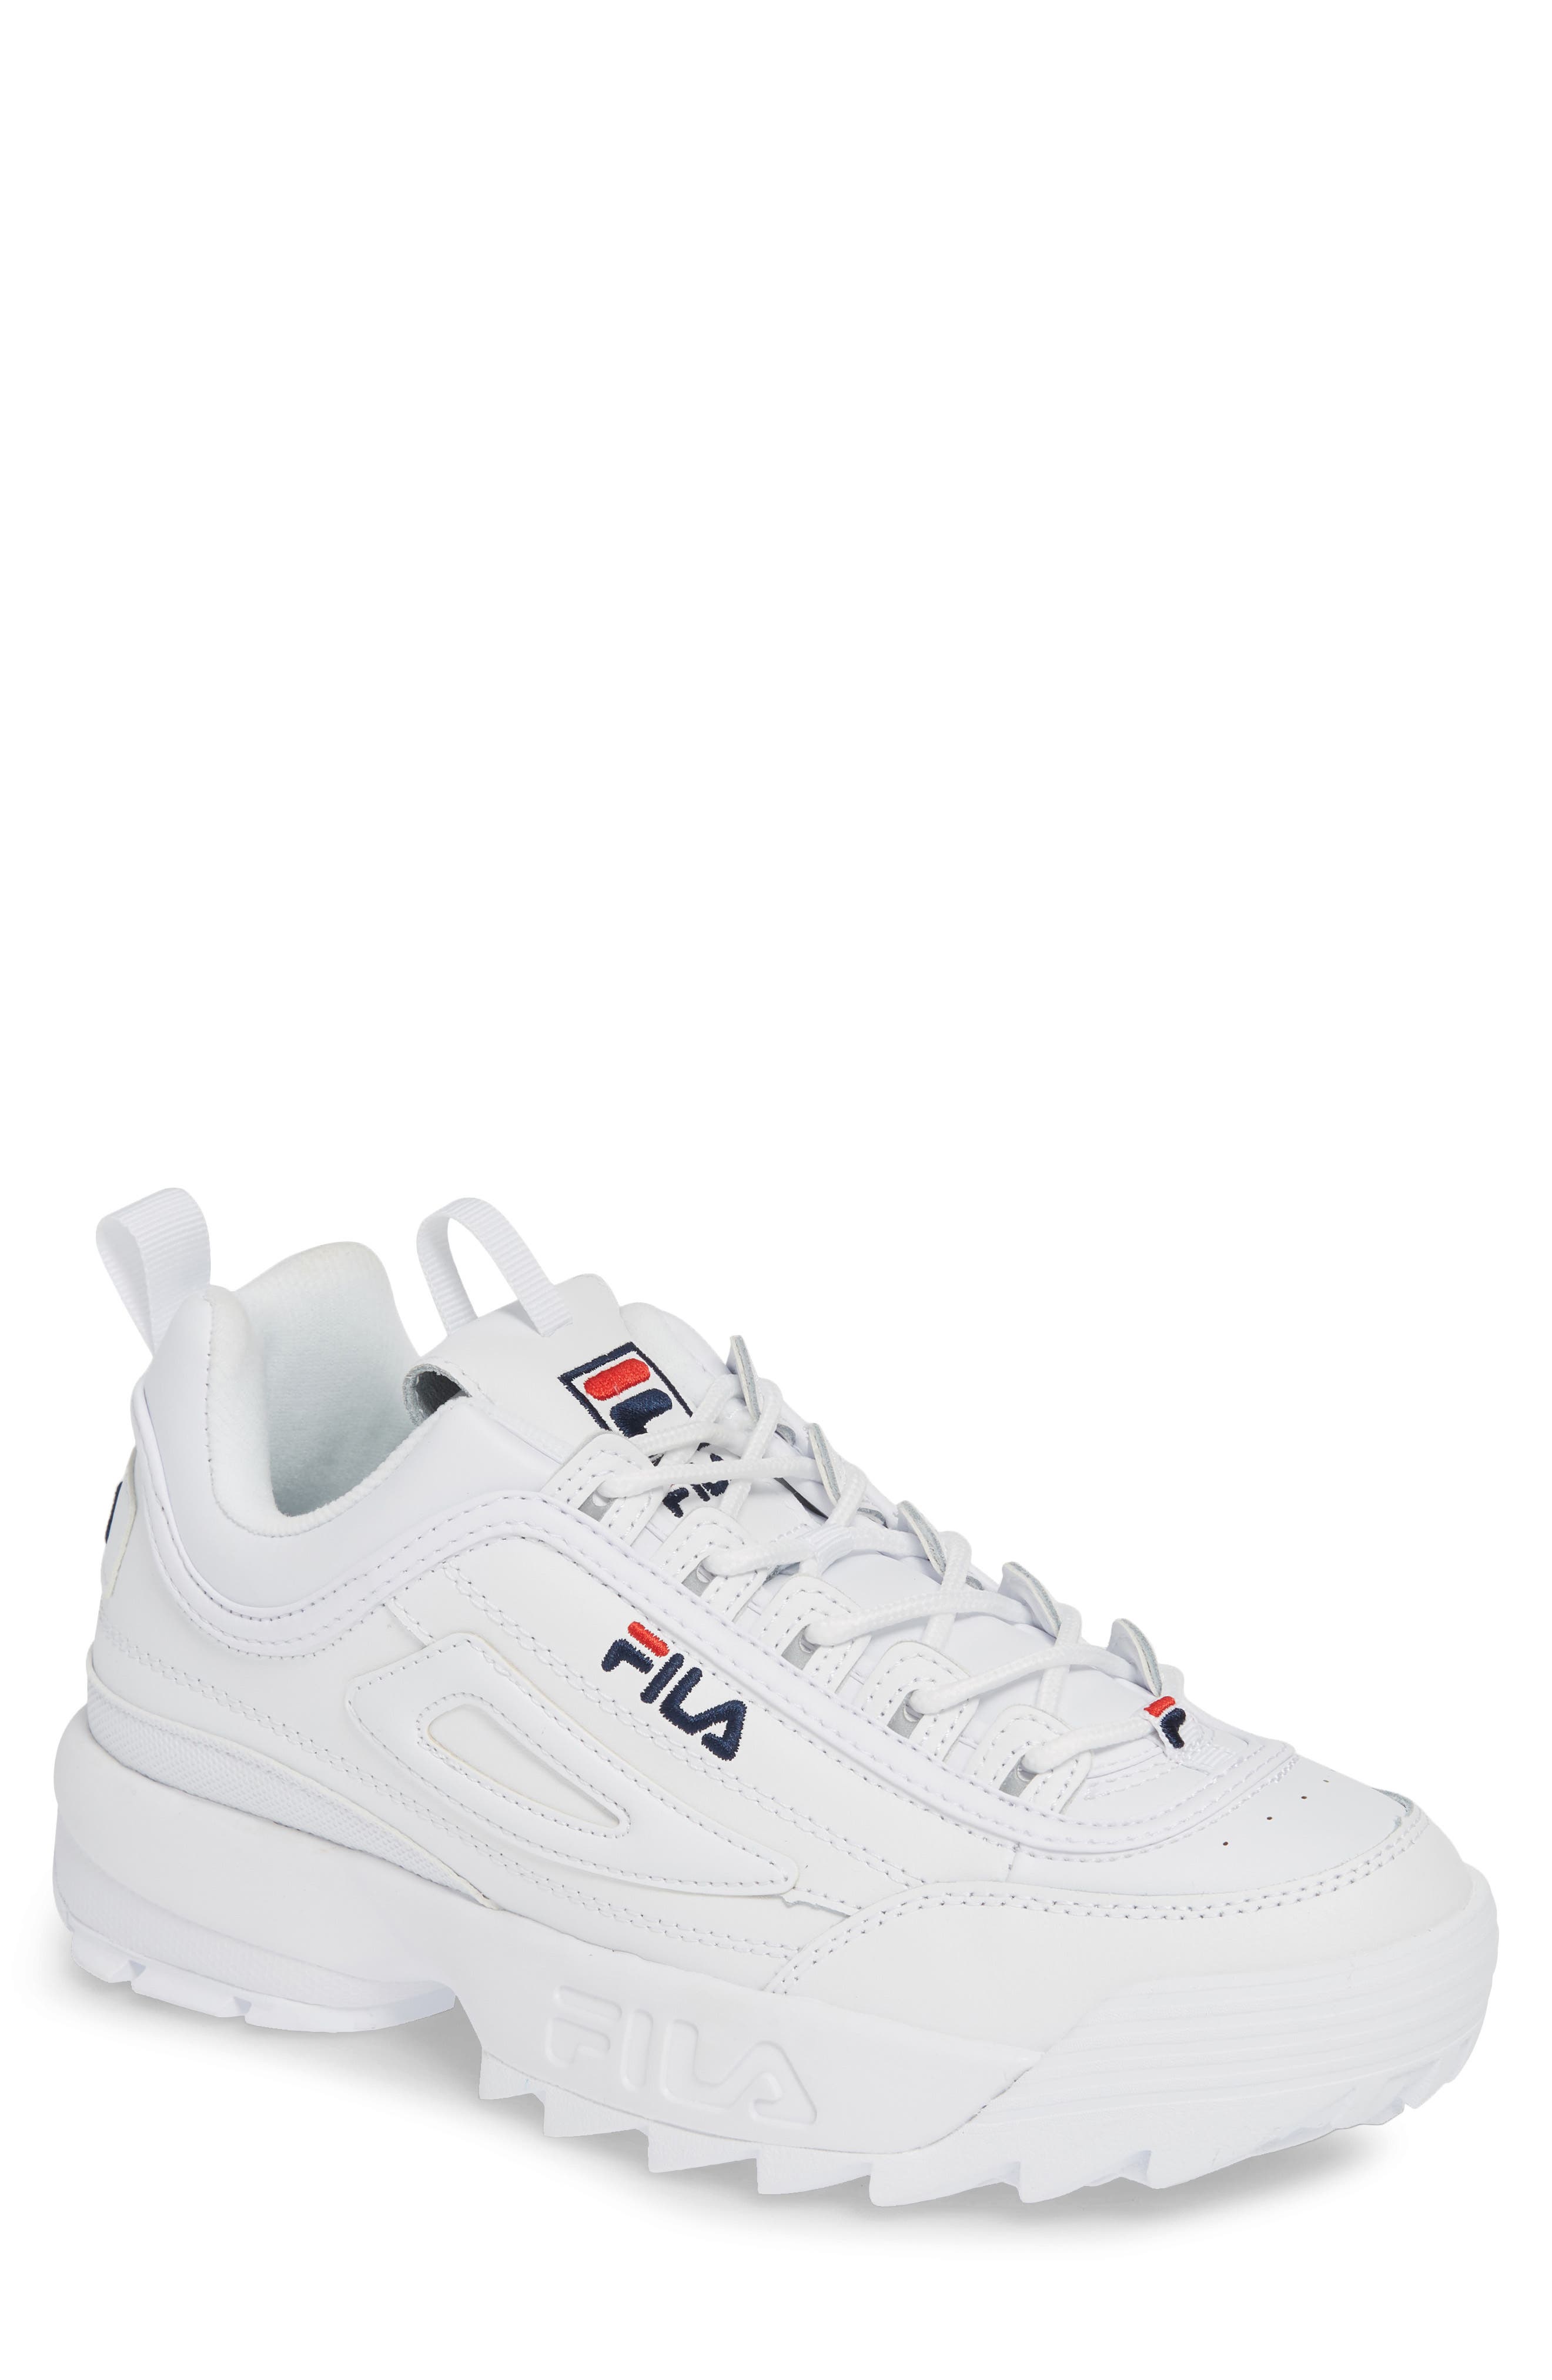 FILA Disruptor II Premium Sneaker 